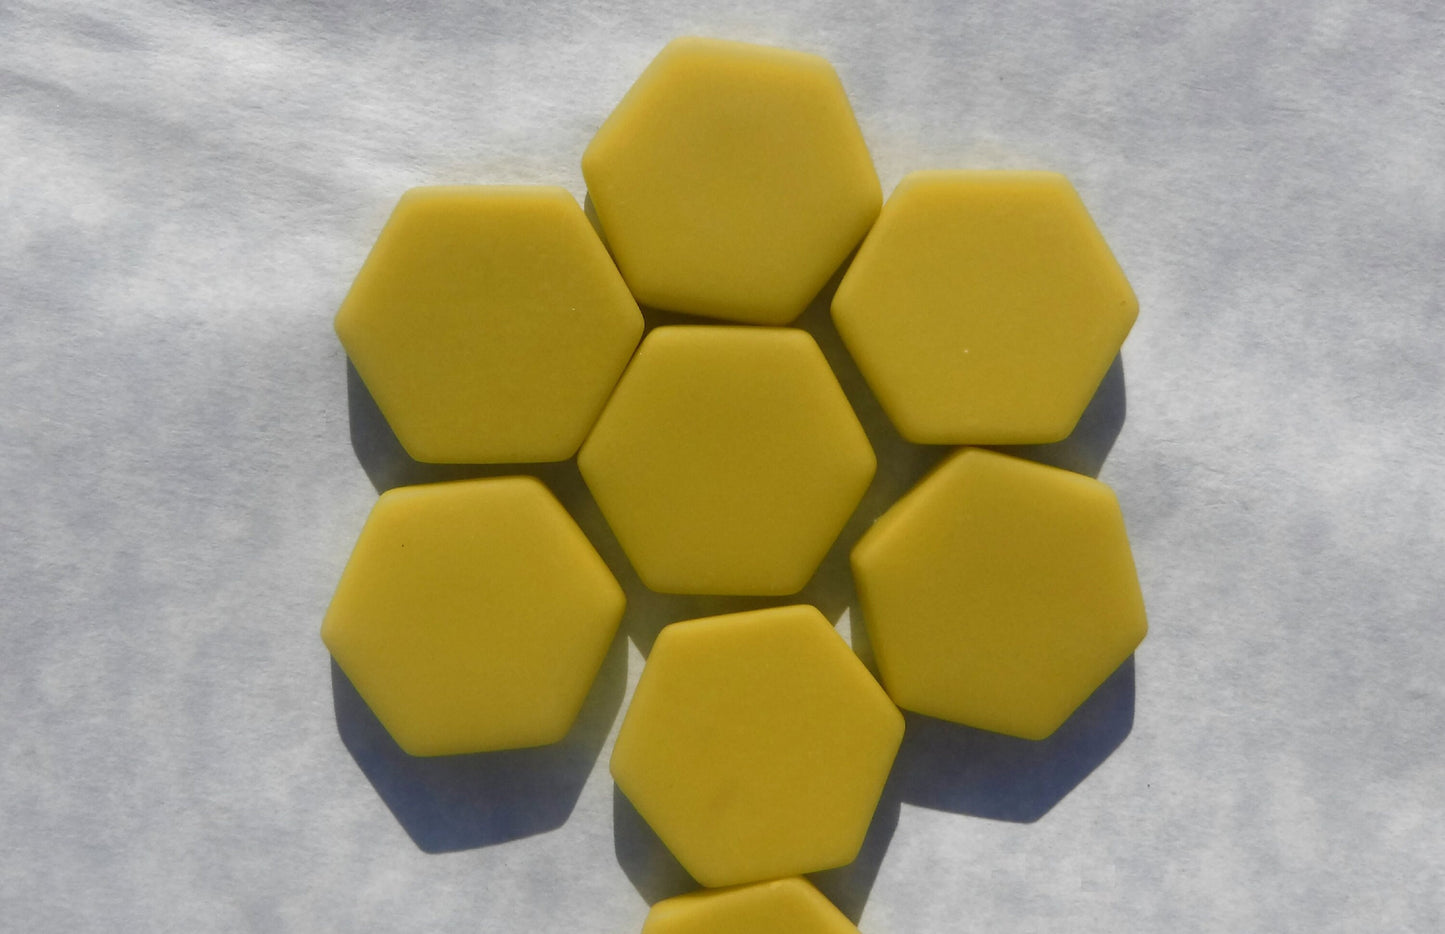 Yellow Hexagon Mosaic Tiles - 25 Glass 23mm MATTE Tiles in Mellow Yellow color